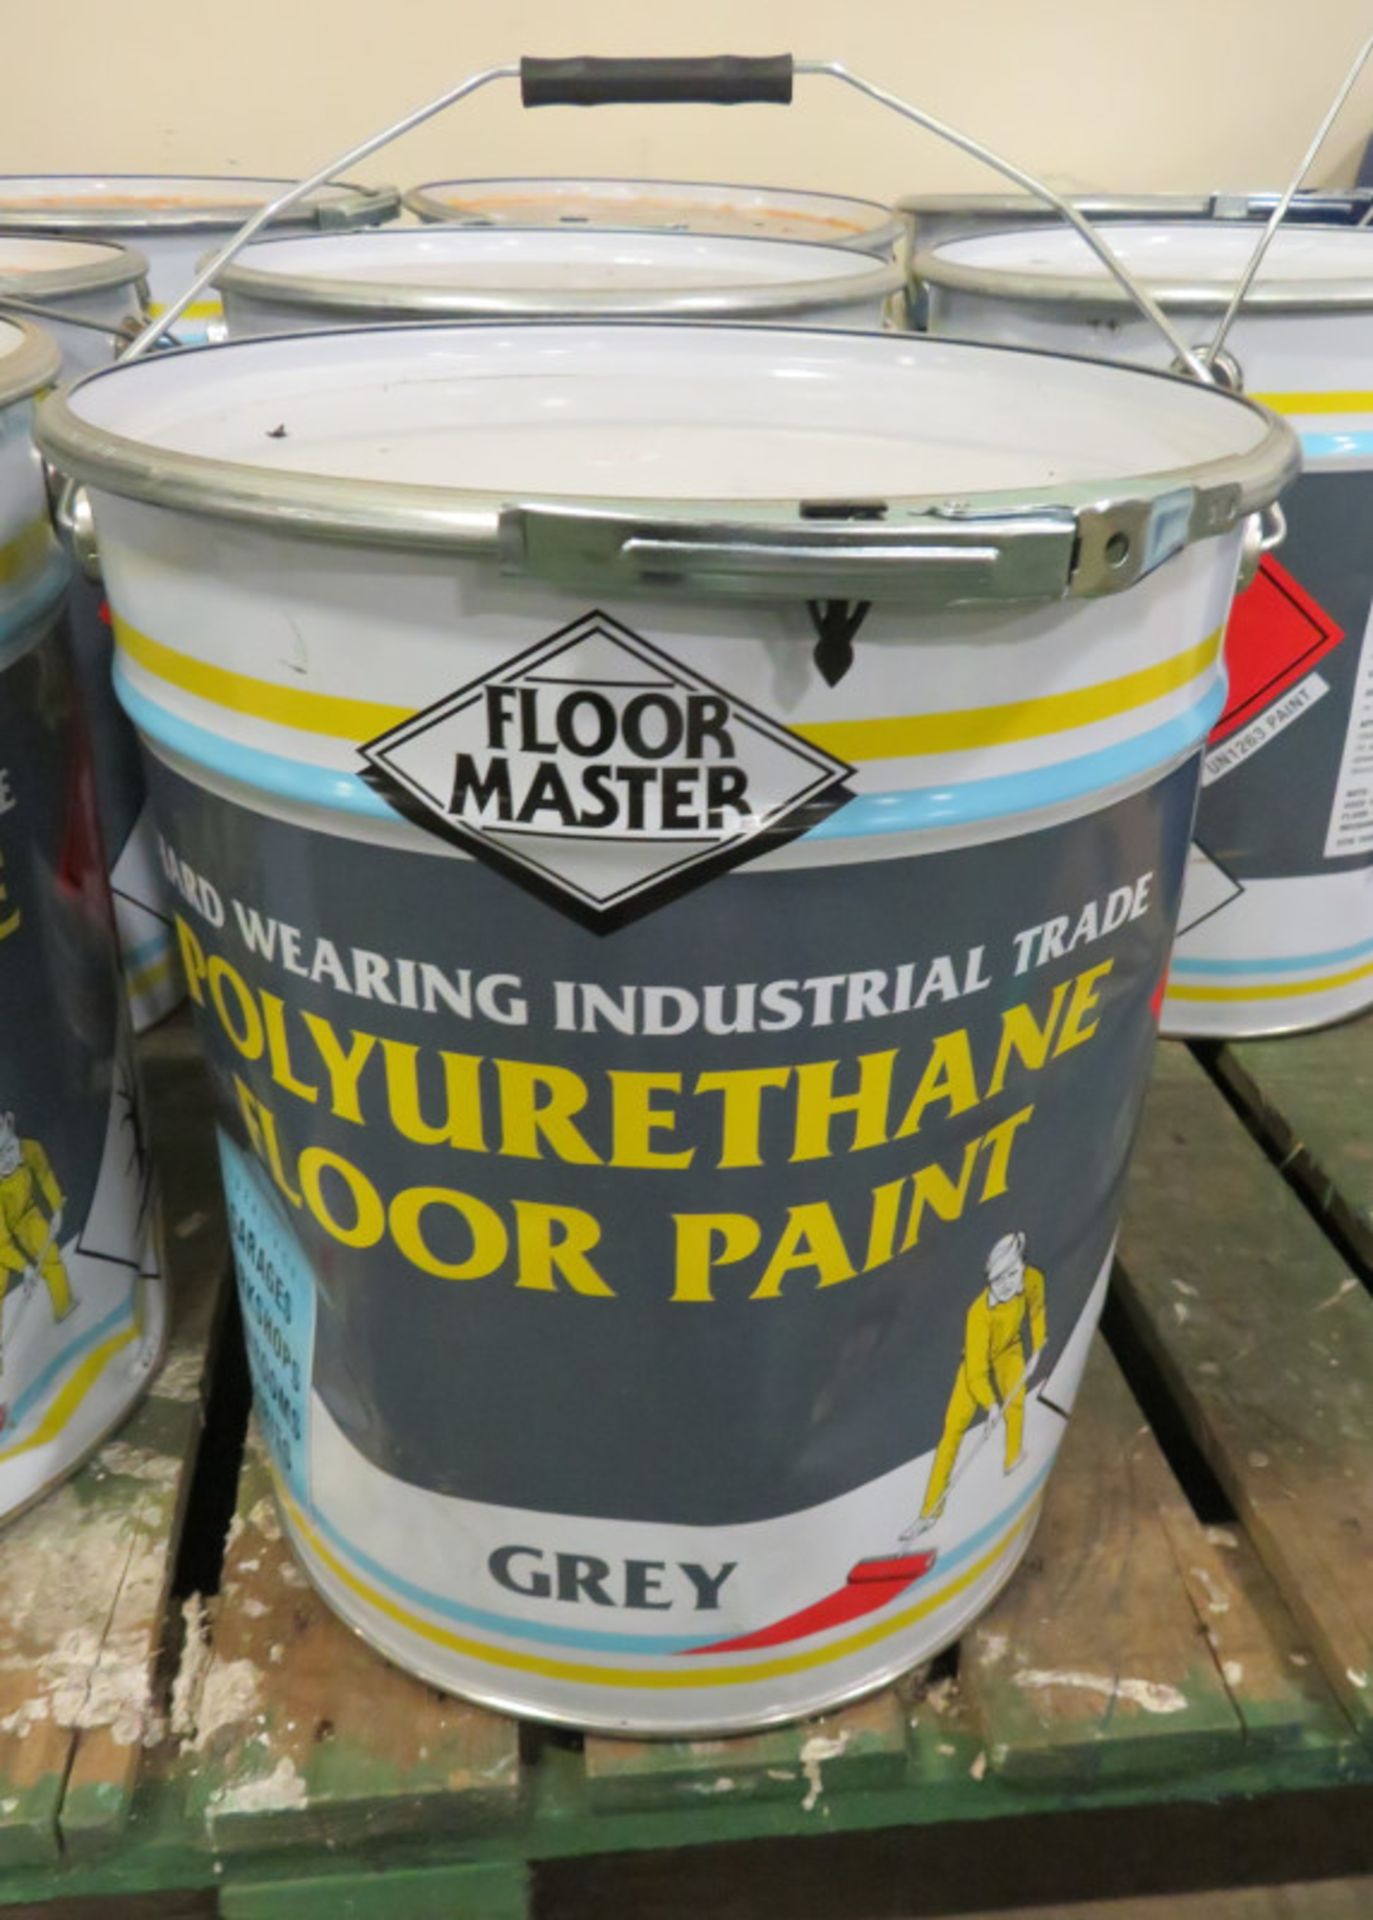 FloorMaster Polyurethane floor paint - Grey - 20LTR - Image 2 of 2